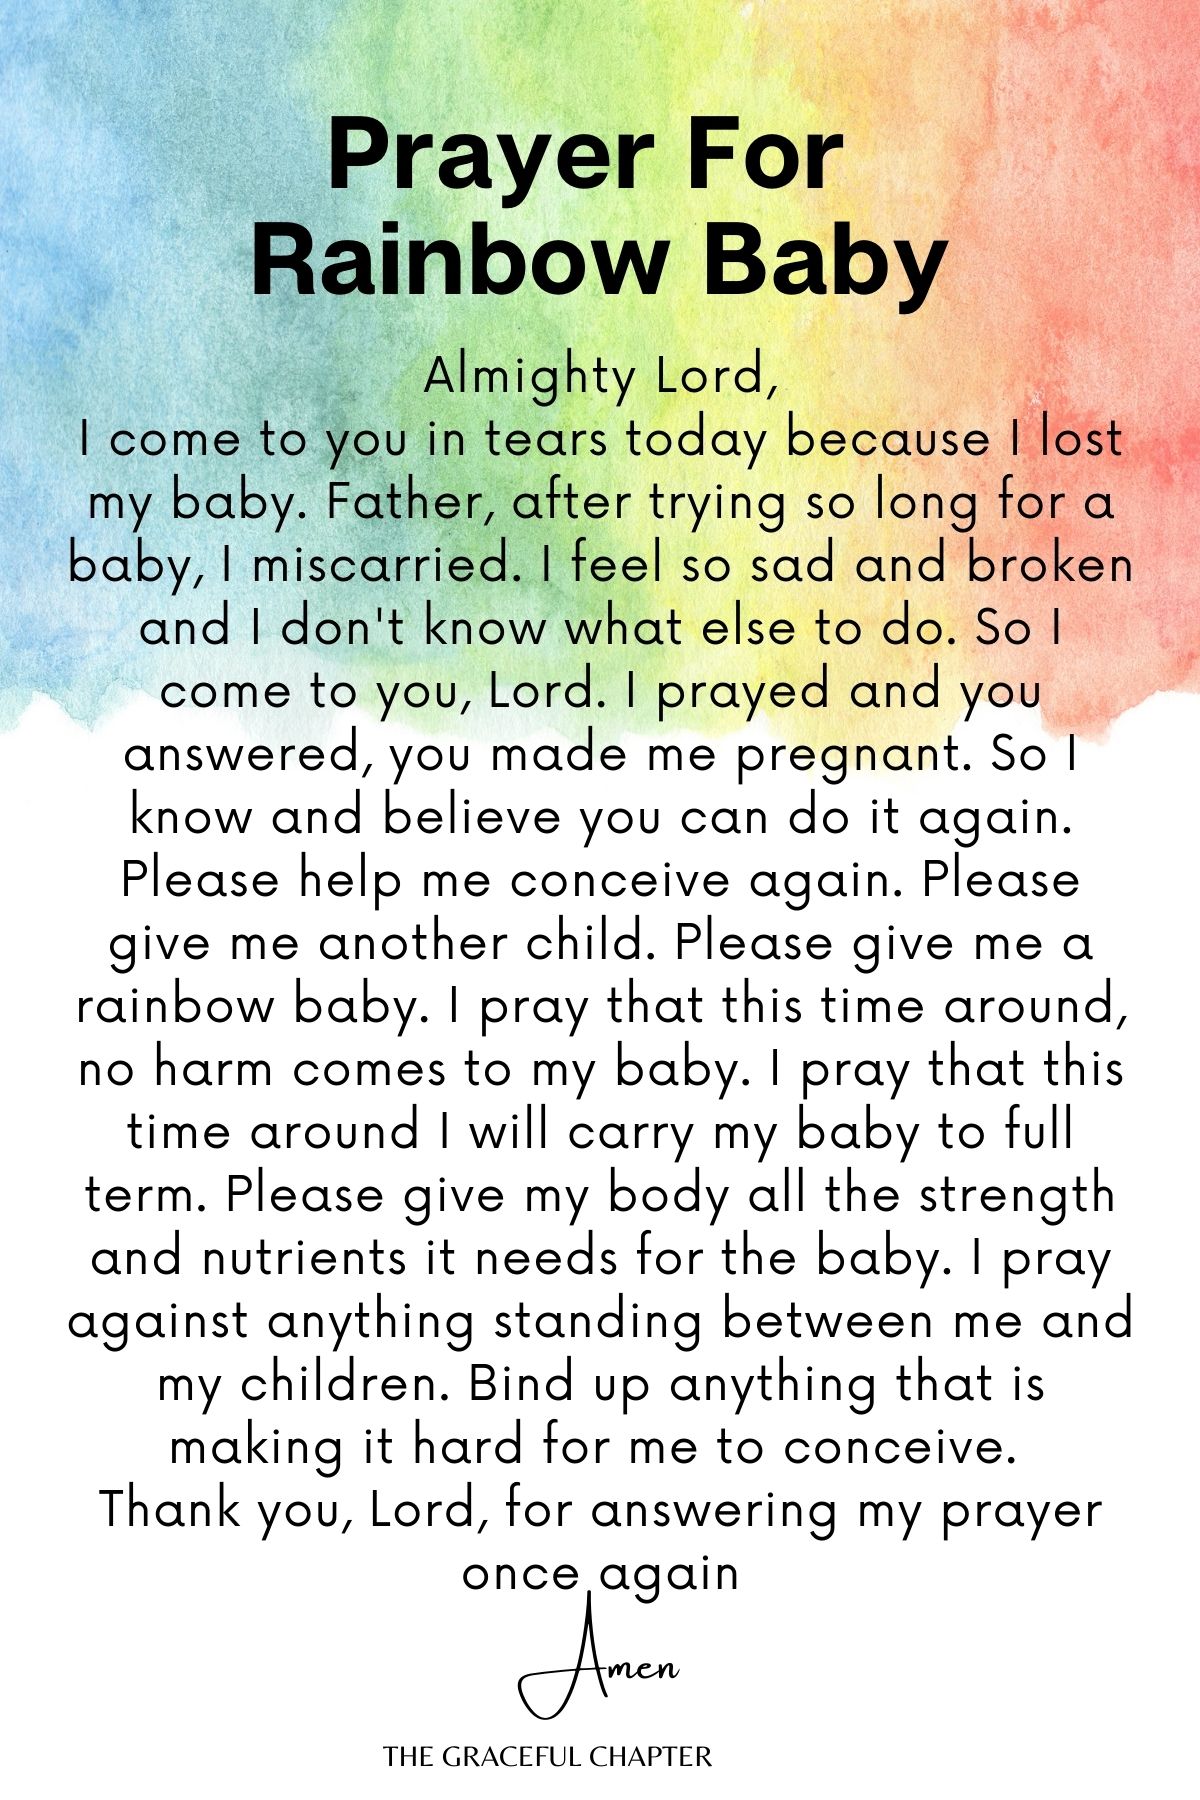 Prayer for rainbow baby